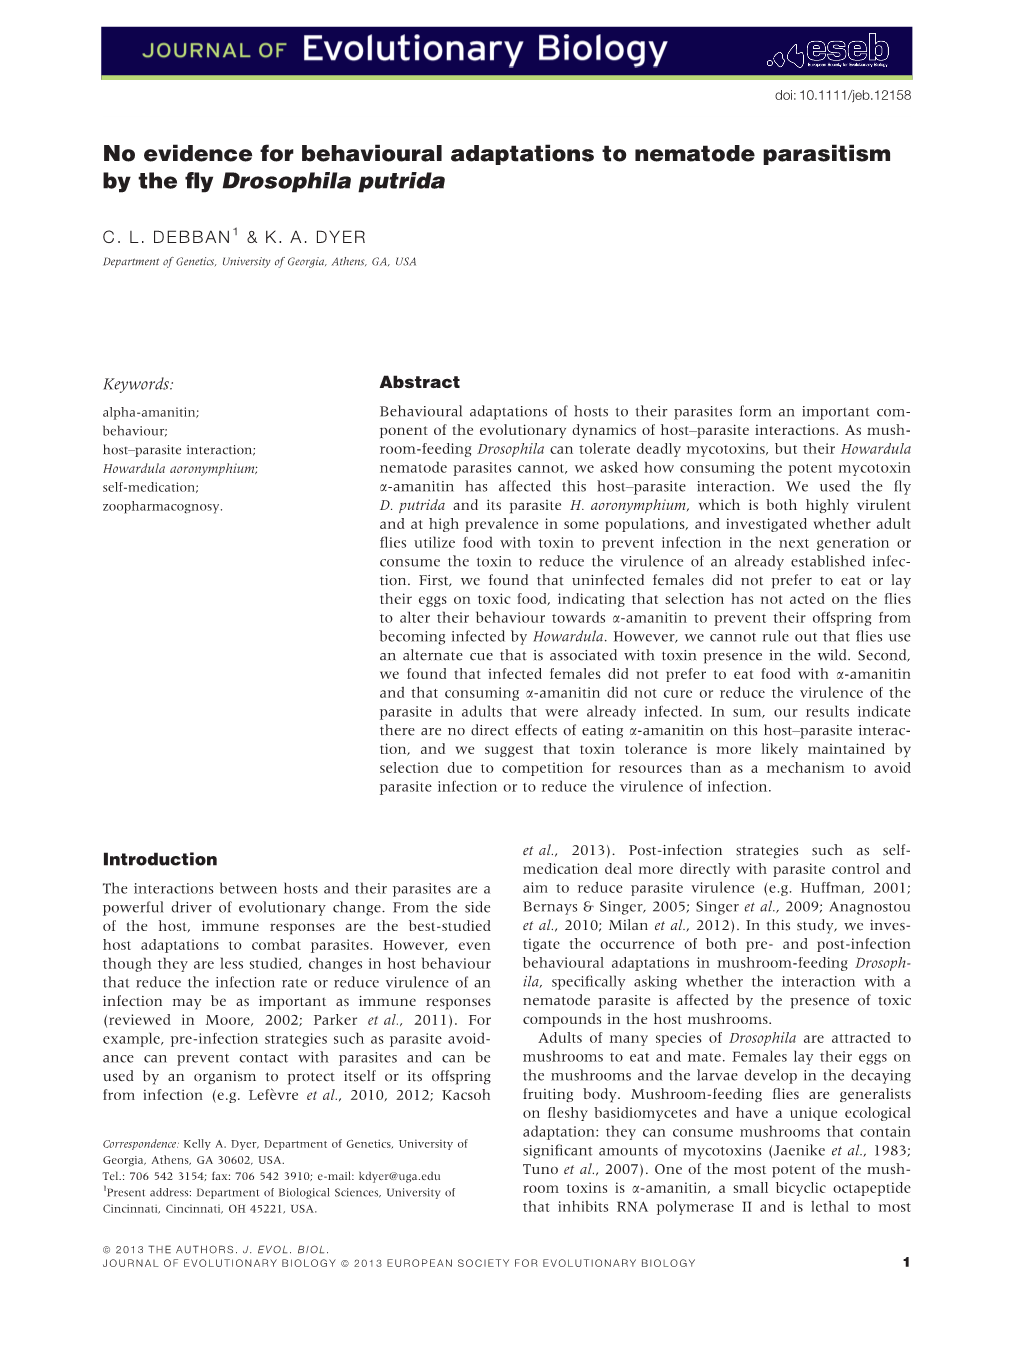 No Evidence for Behavioural Adaptations to Nematode Parasitism by the ﬂy Drosophila Putrida